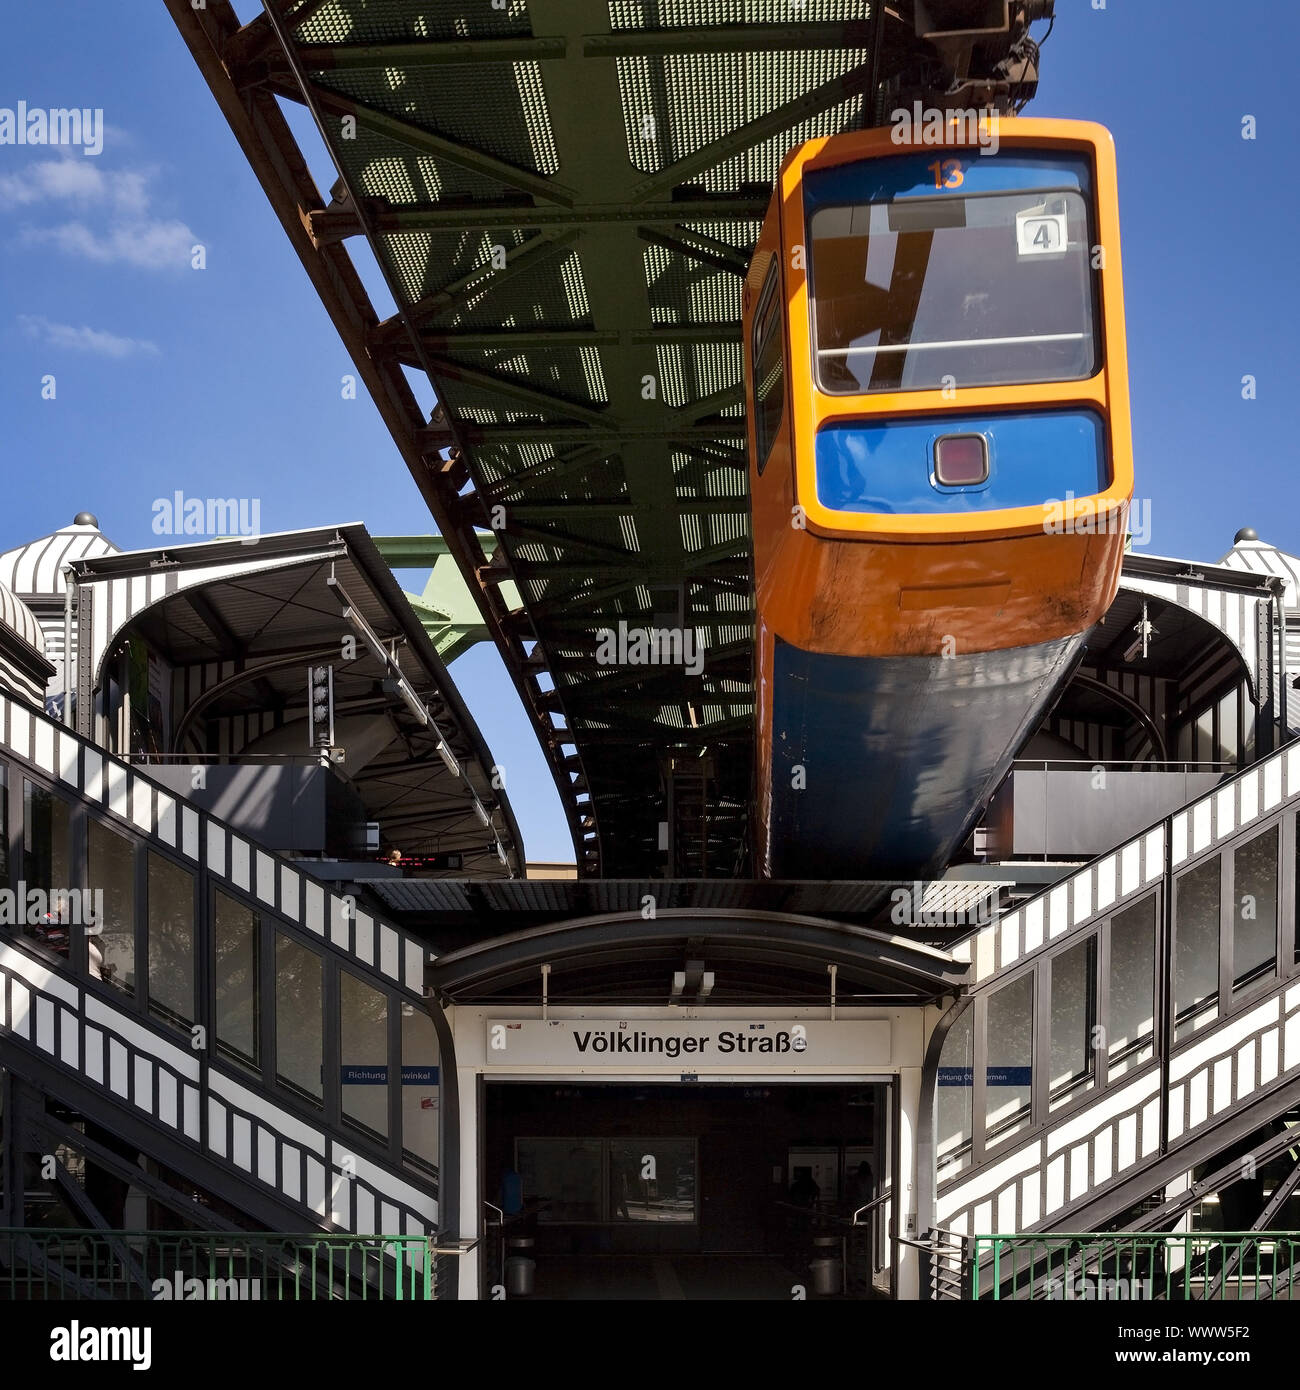 Suspension Railway at station Voelklinger Strasse, Wuppertal, North Rhine-Westphalia, Germany Stock Photo